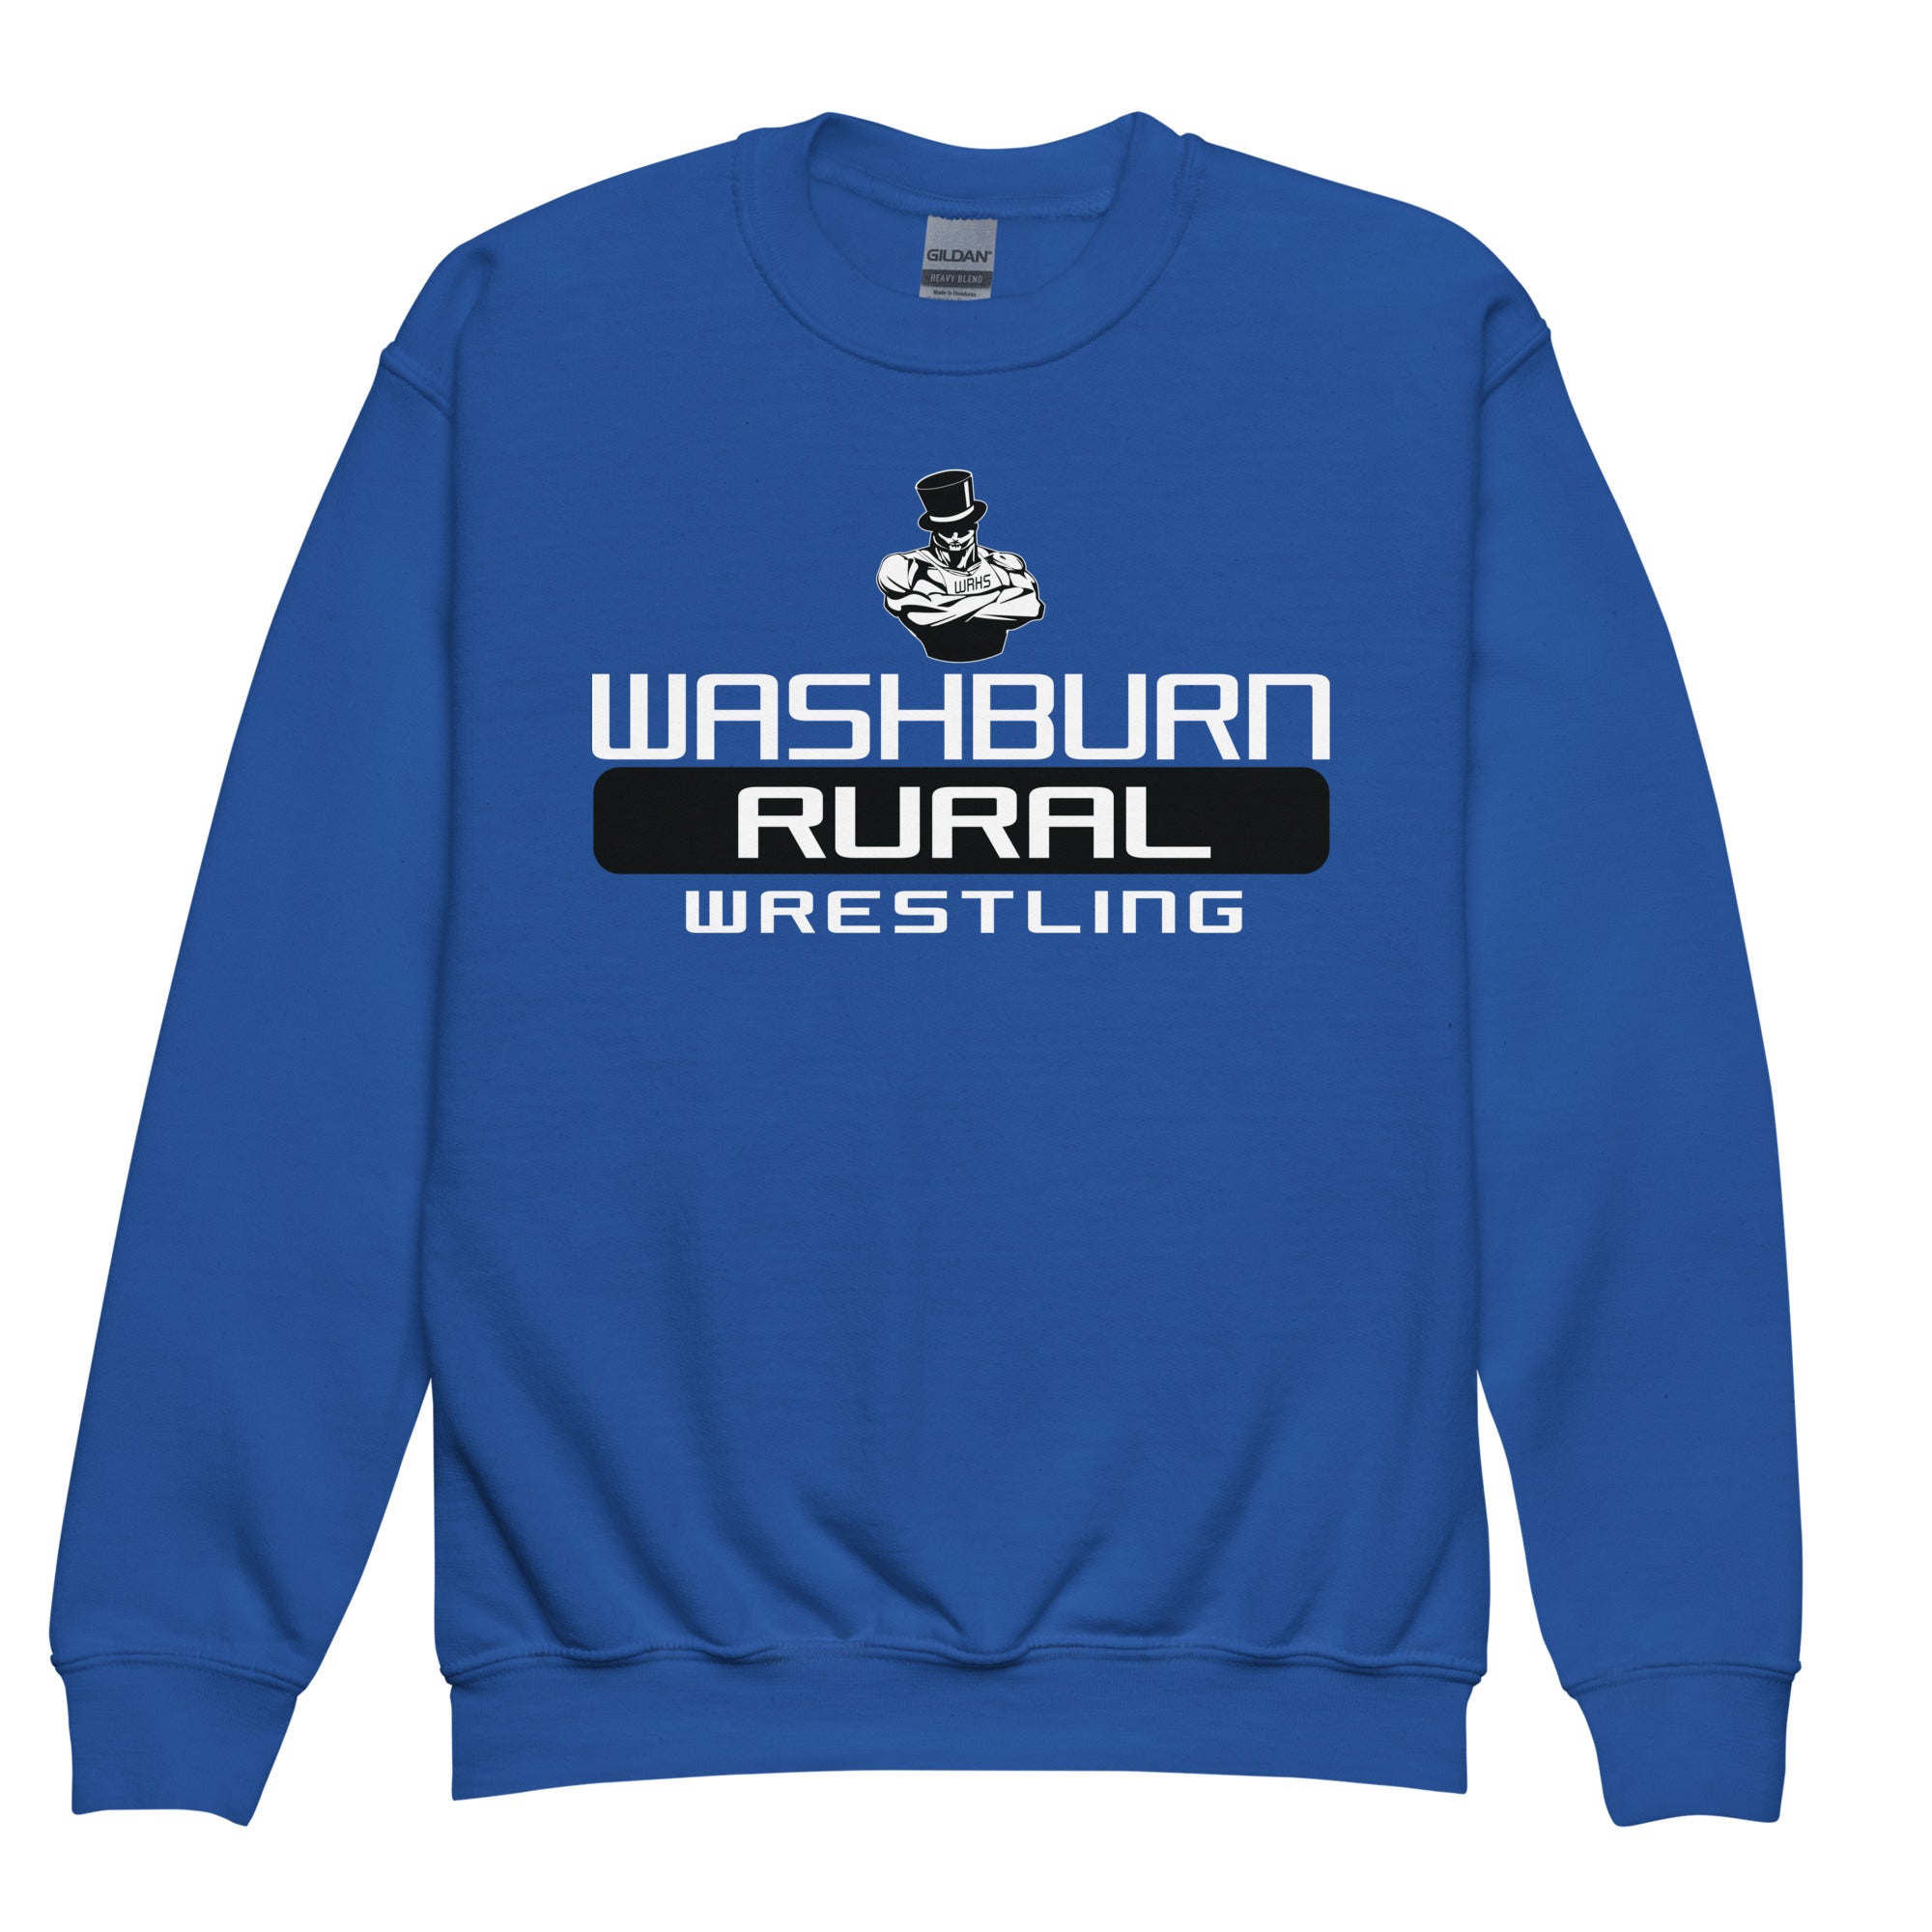 Washburn Rural Wrestling Youth crewneck sweatshirt